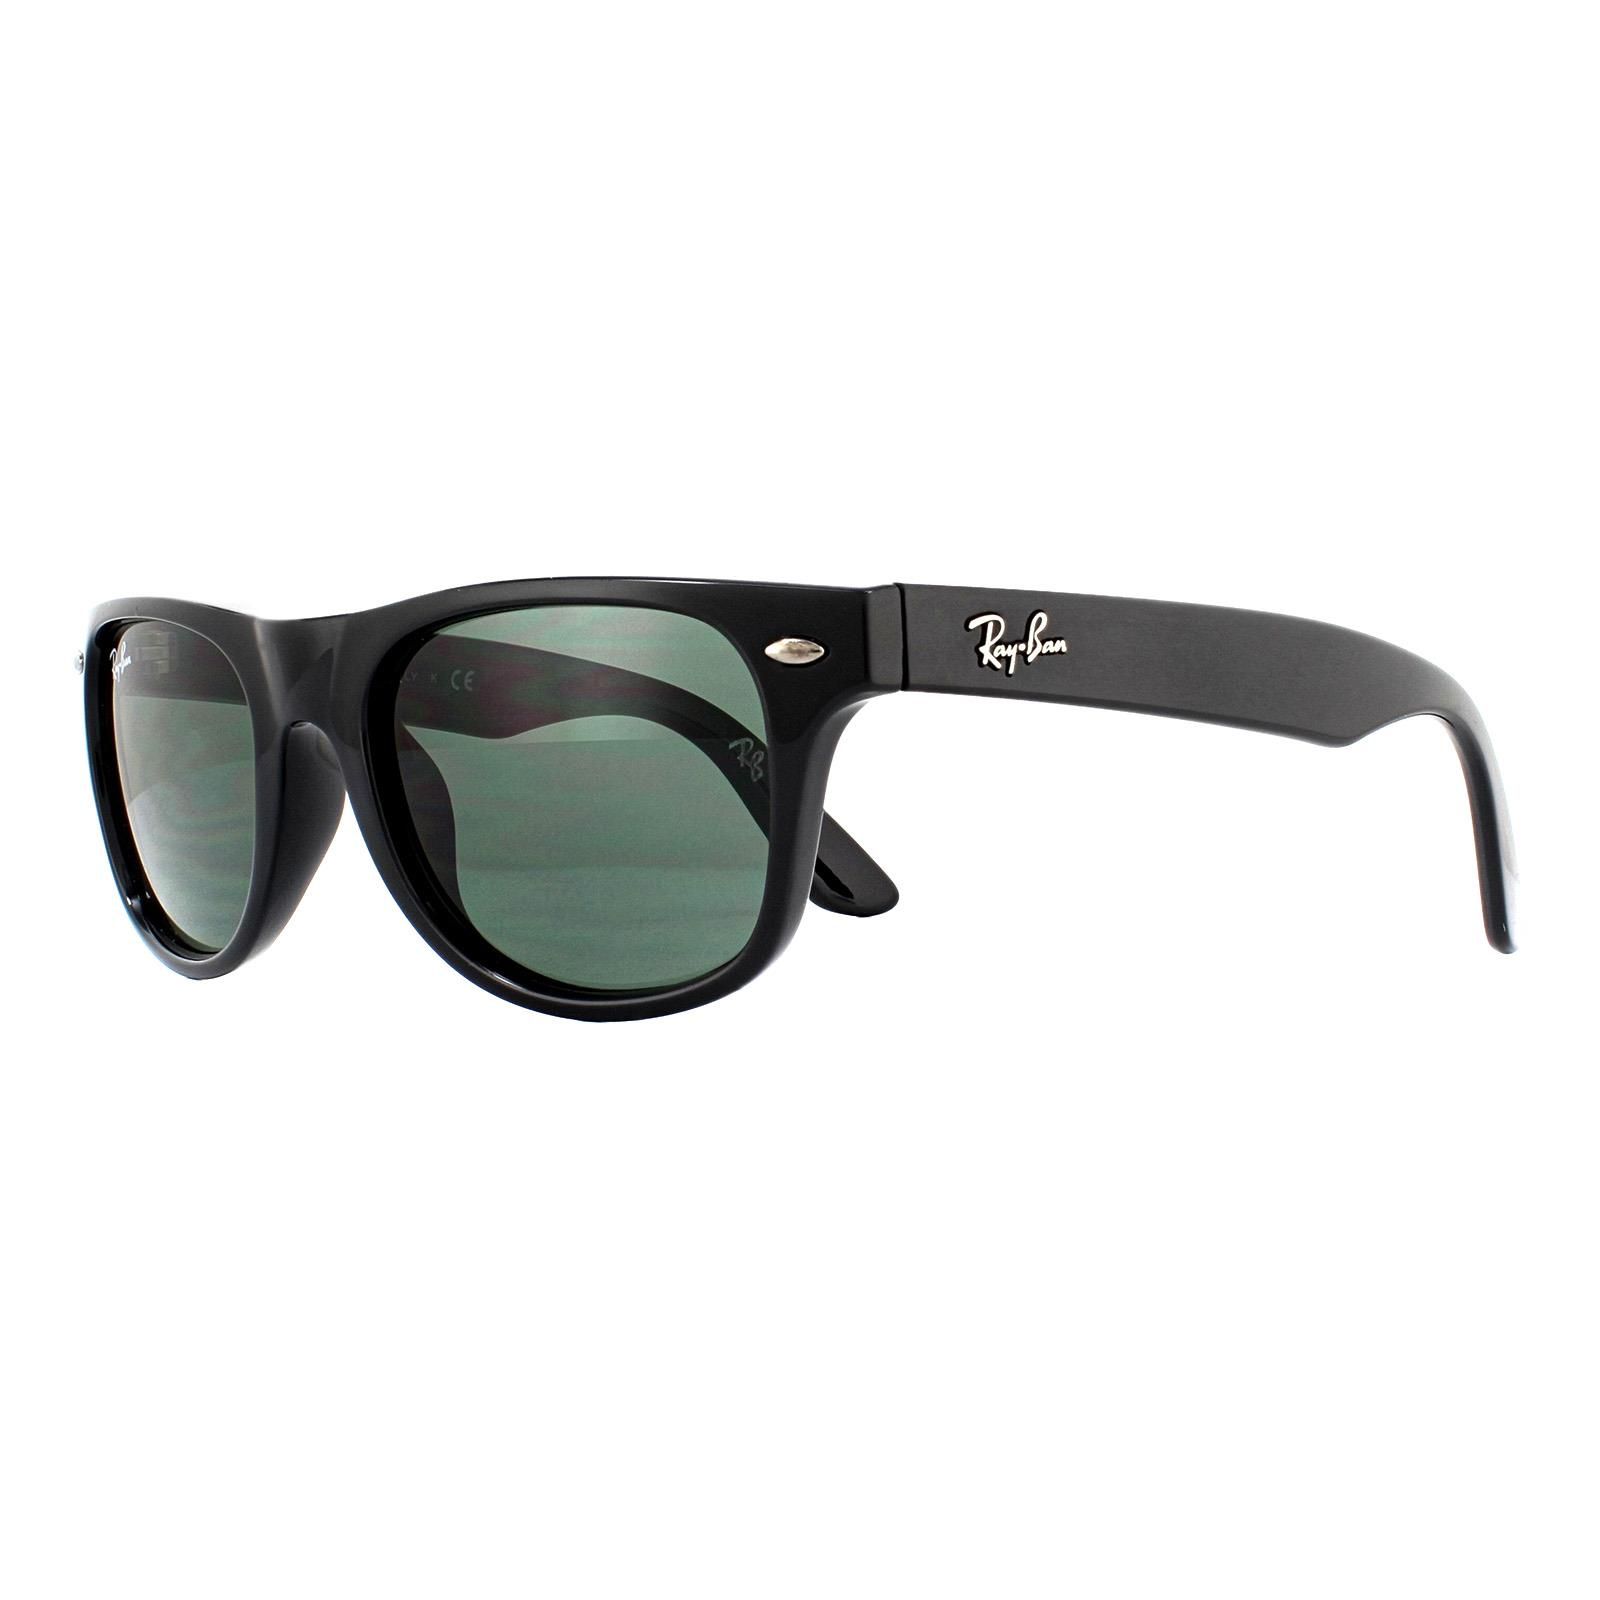 Ray-Ban Junior Sunglasses 9035 100/71 Black Green